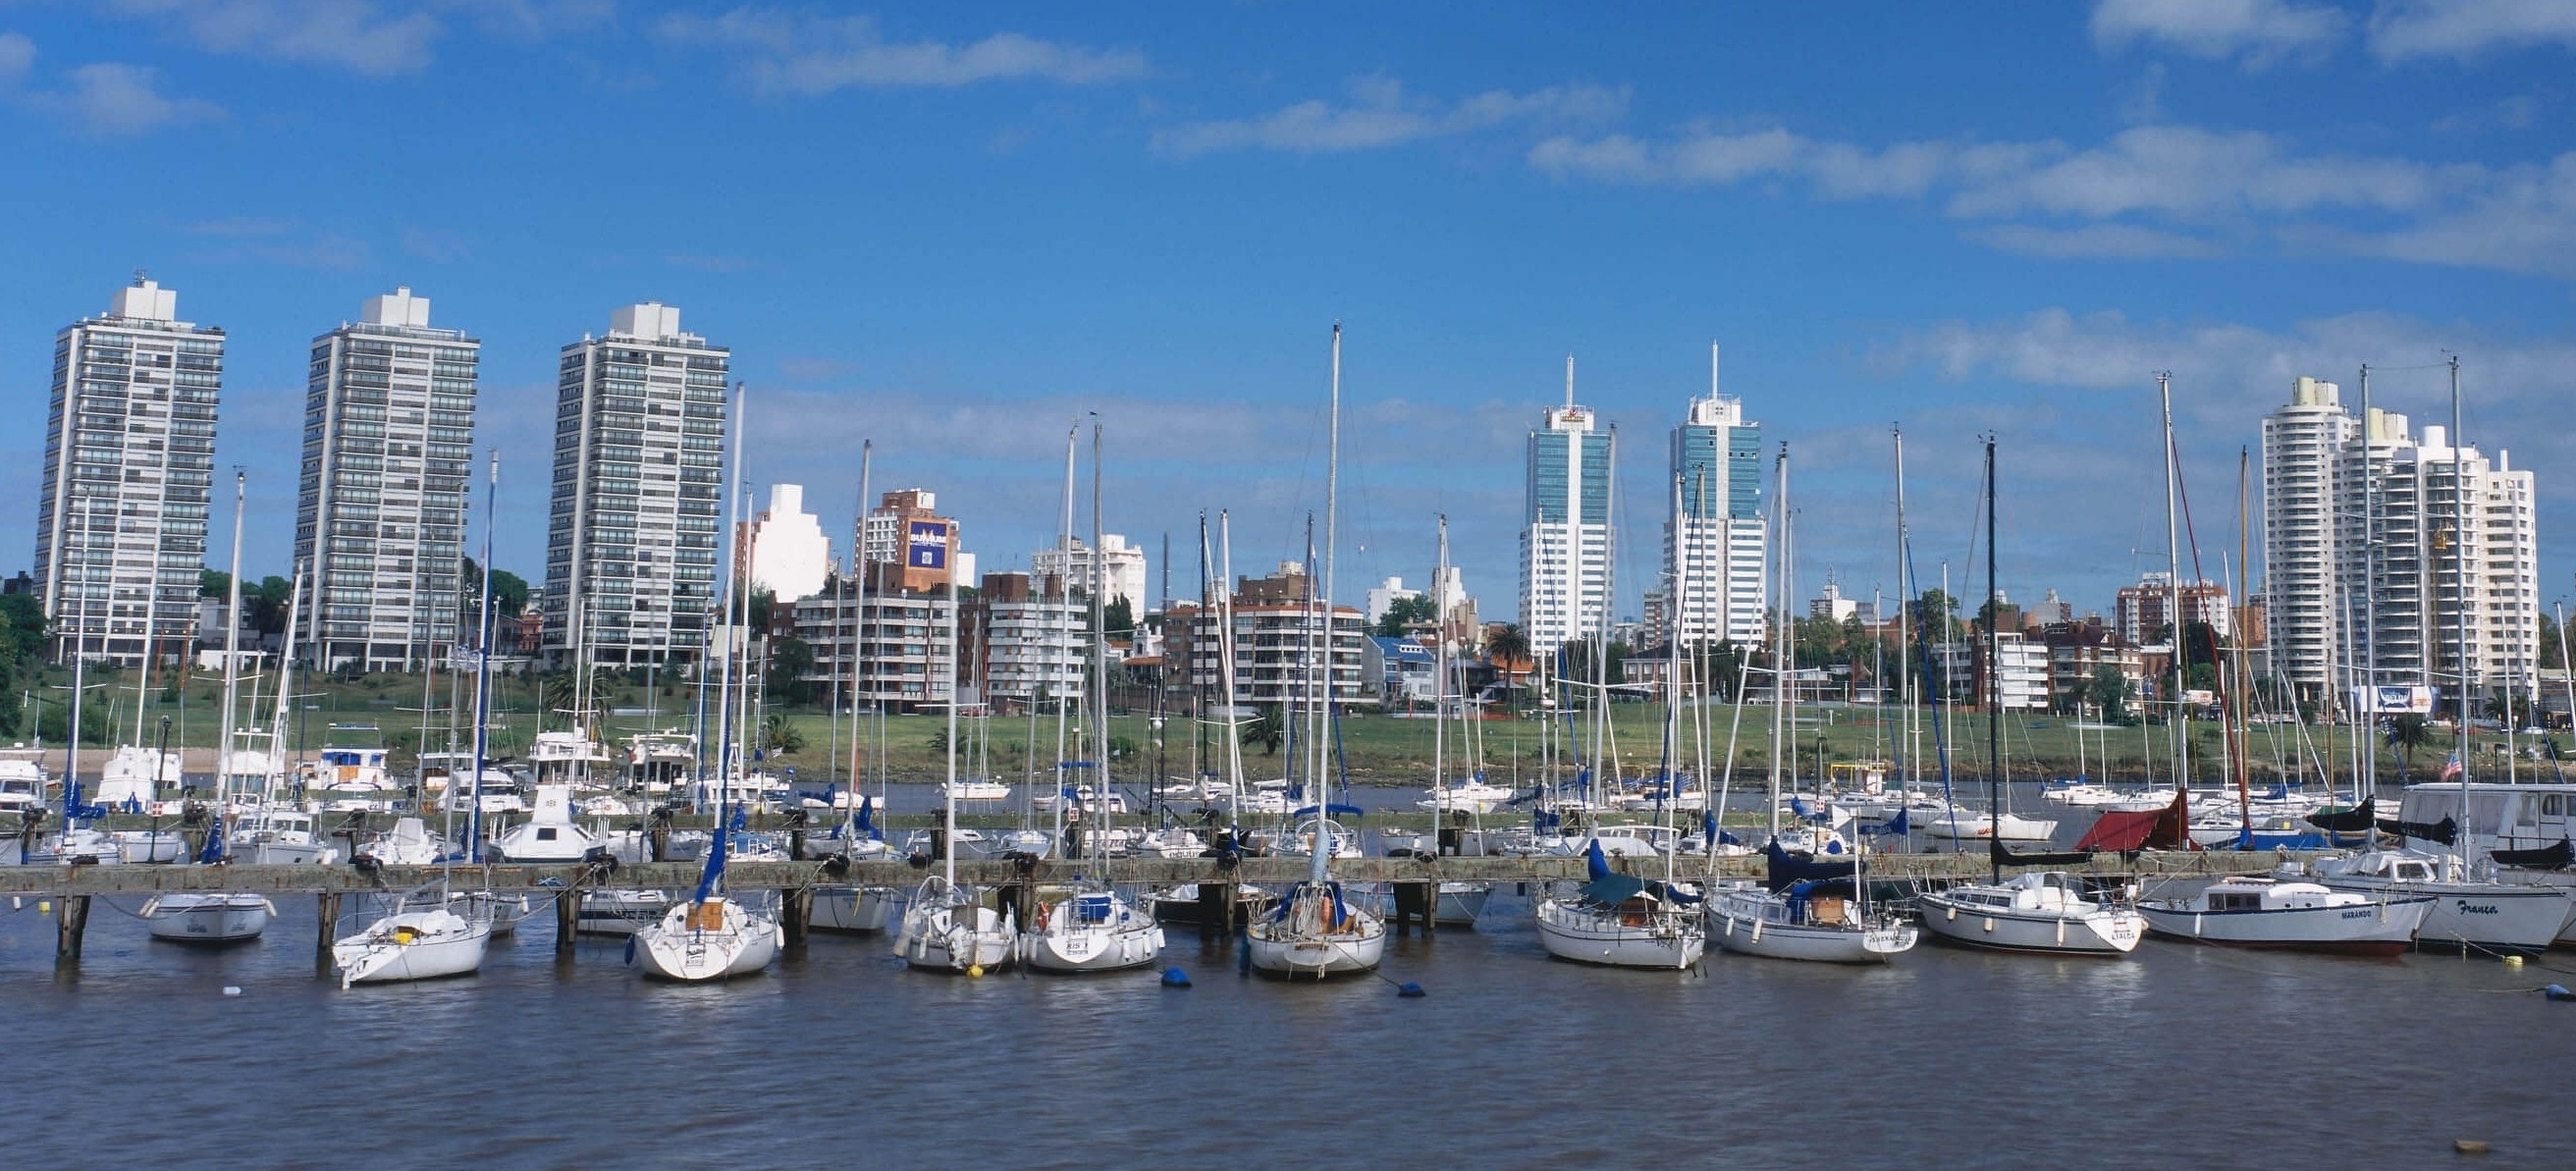 Panoramica-Montevideo1-e1433353580487